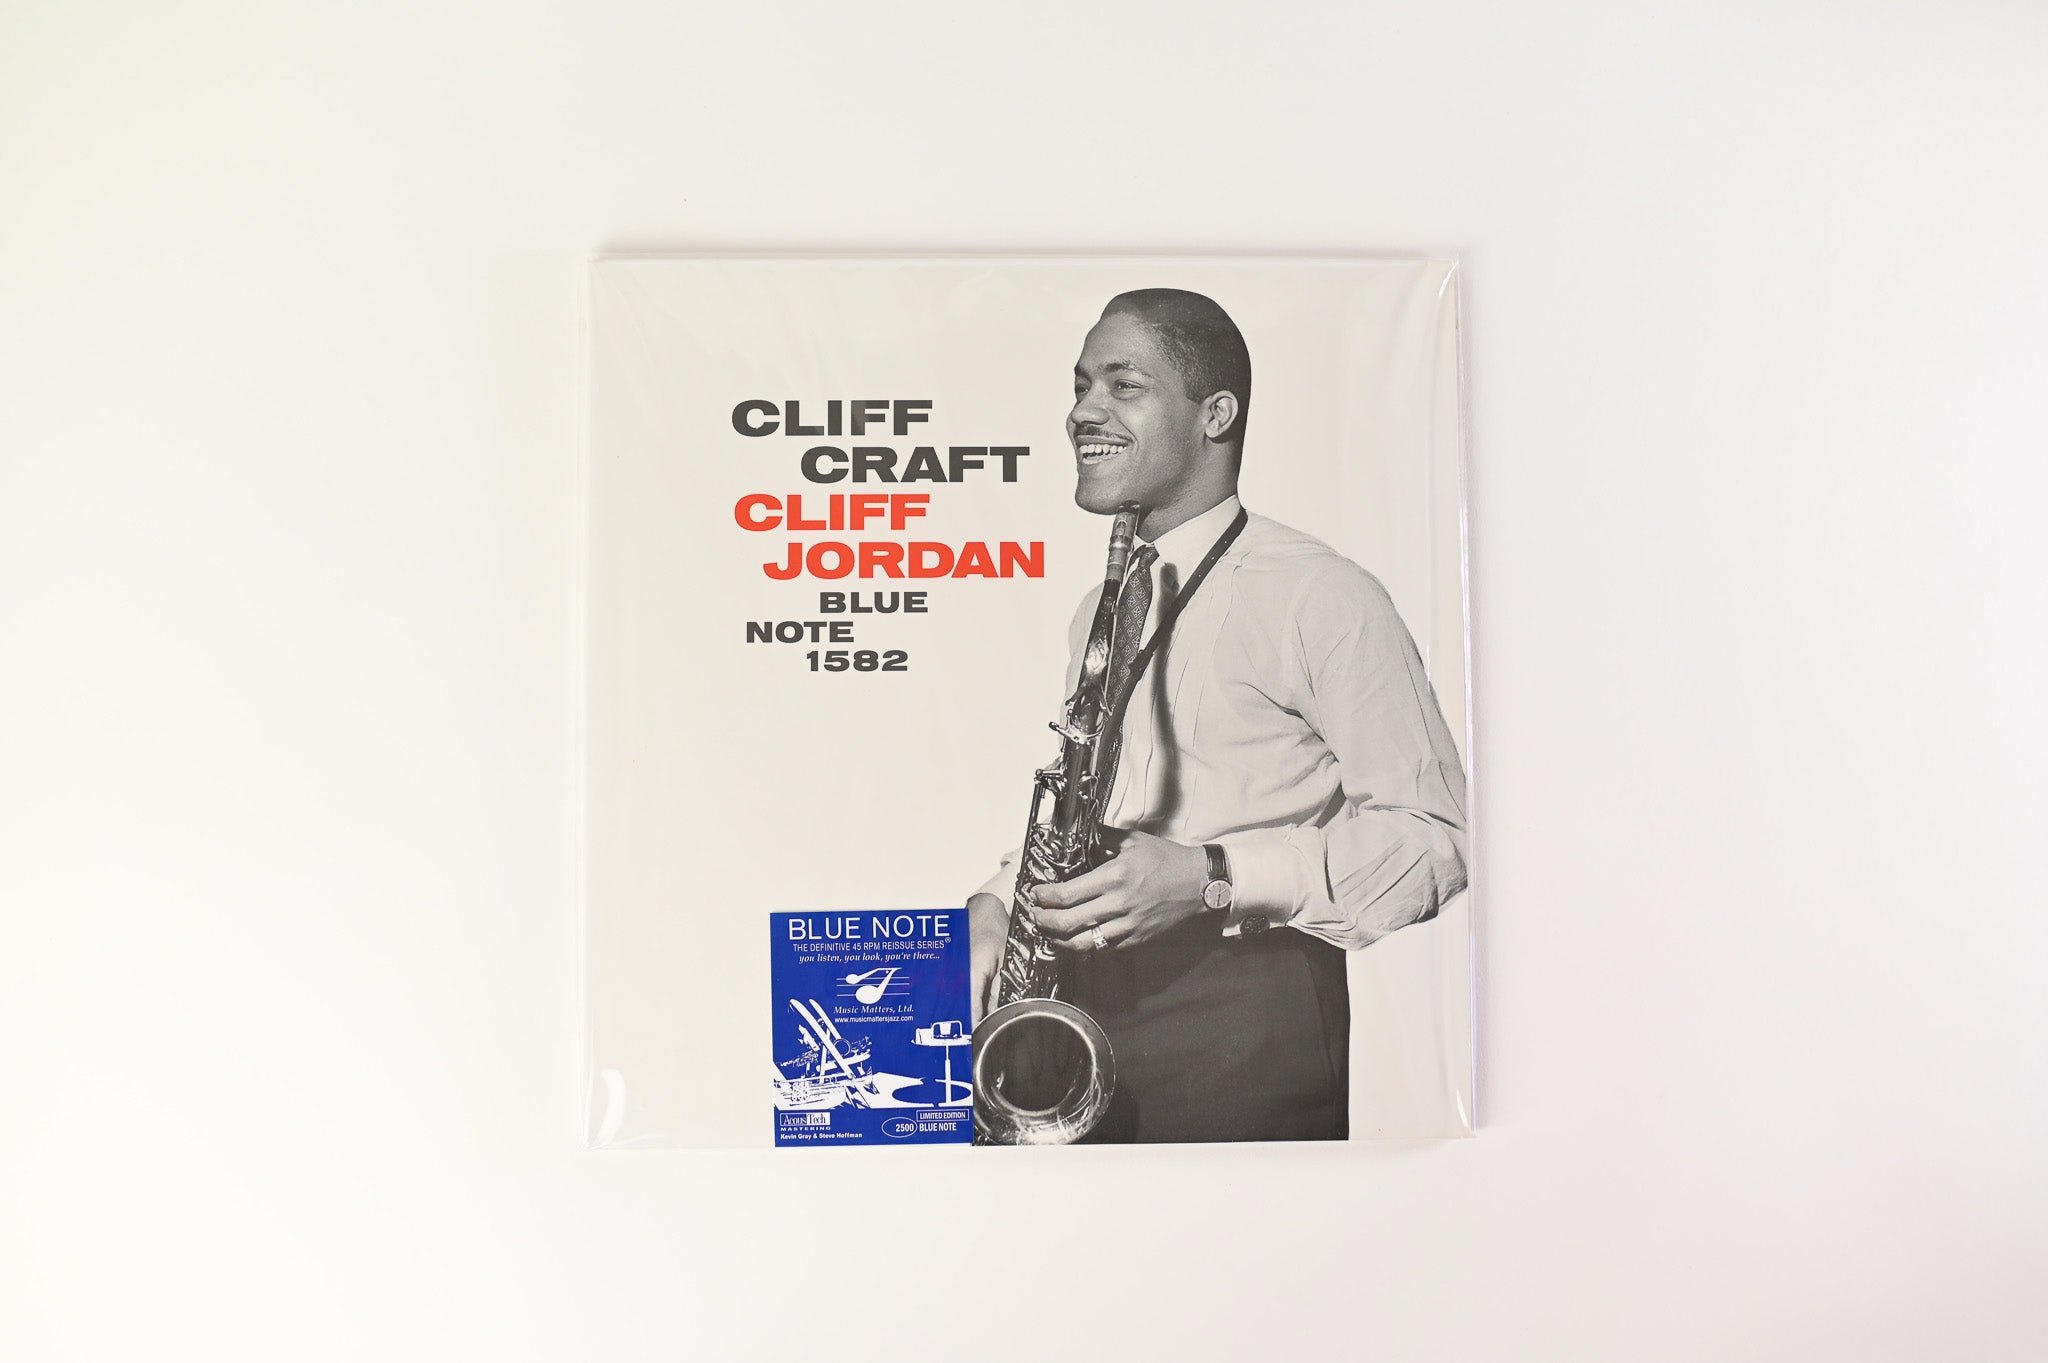 Clifford Jordan - Cliff Craft on Blue Note Music Matters Ltd Reissue 45 RPM